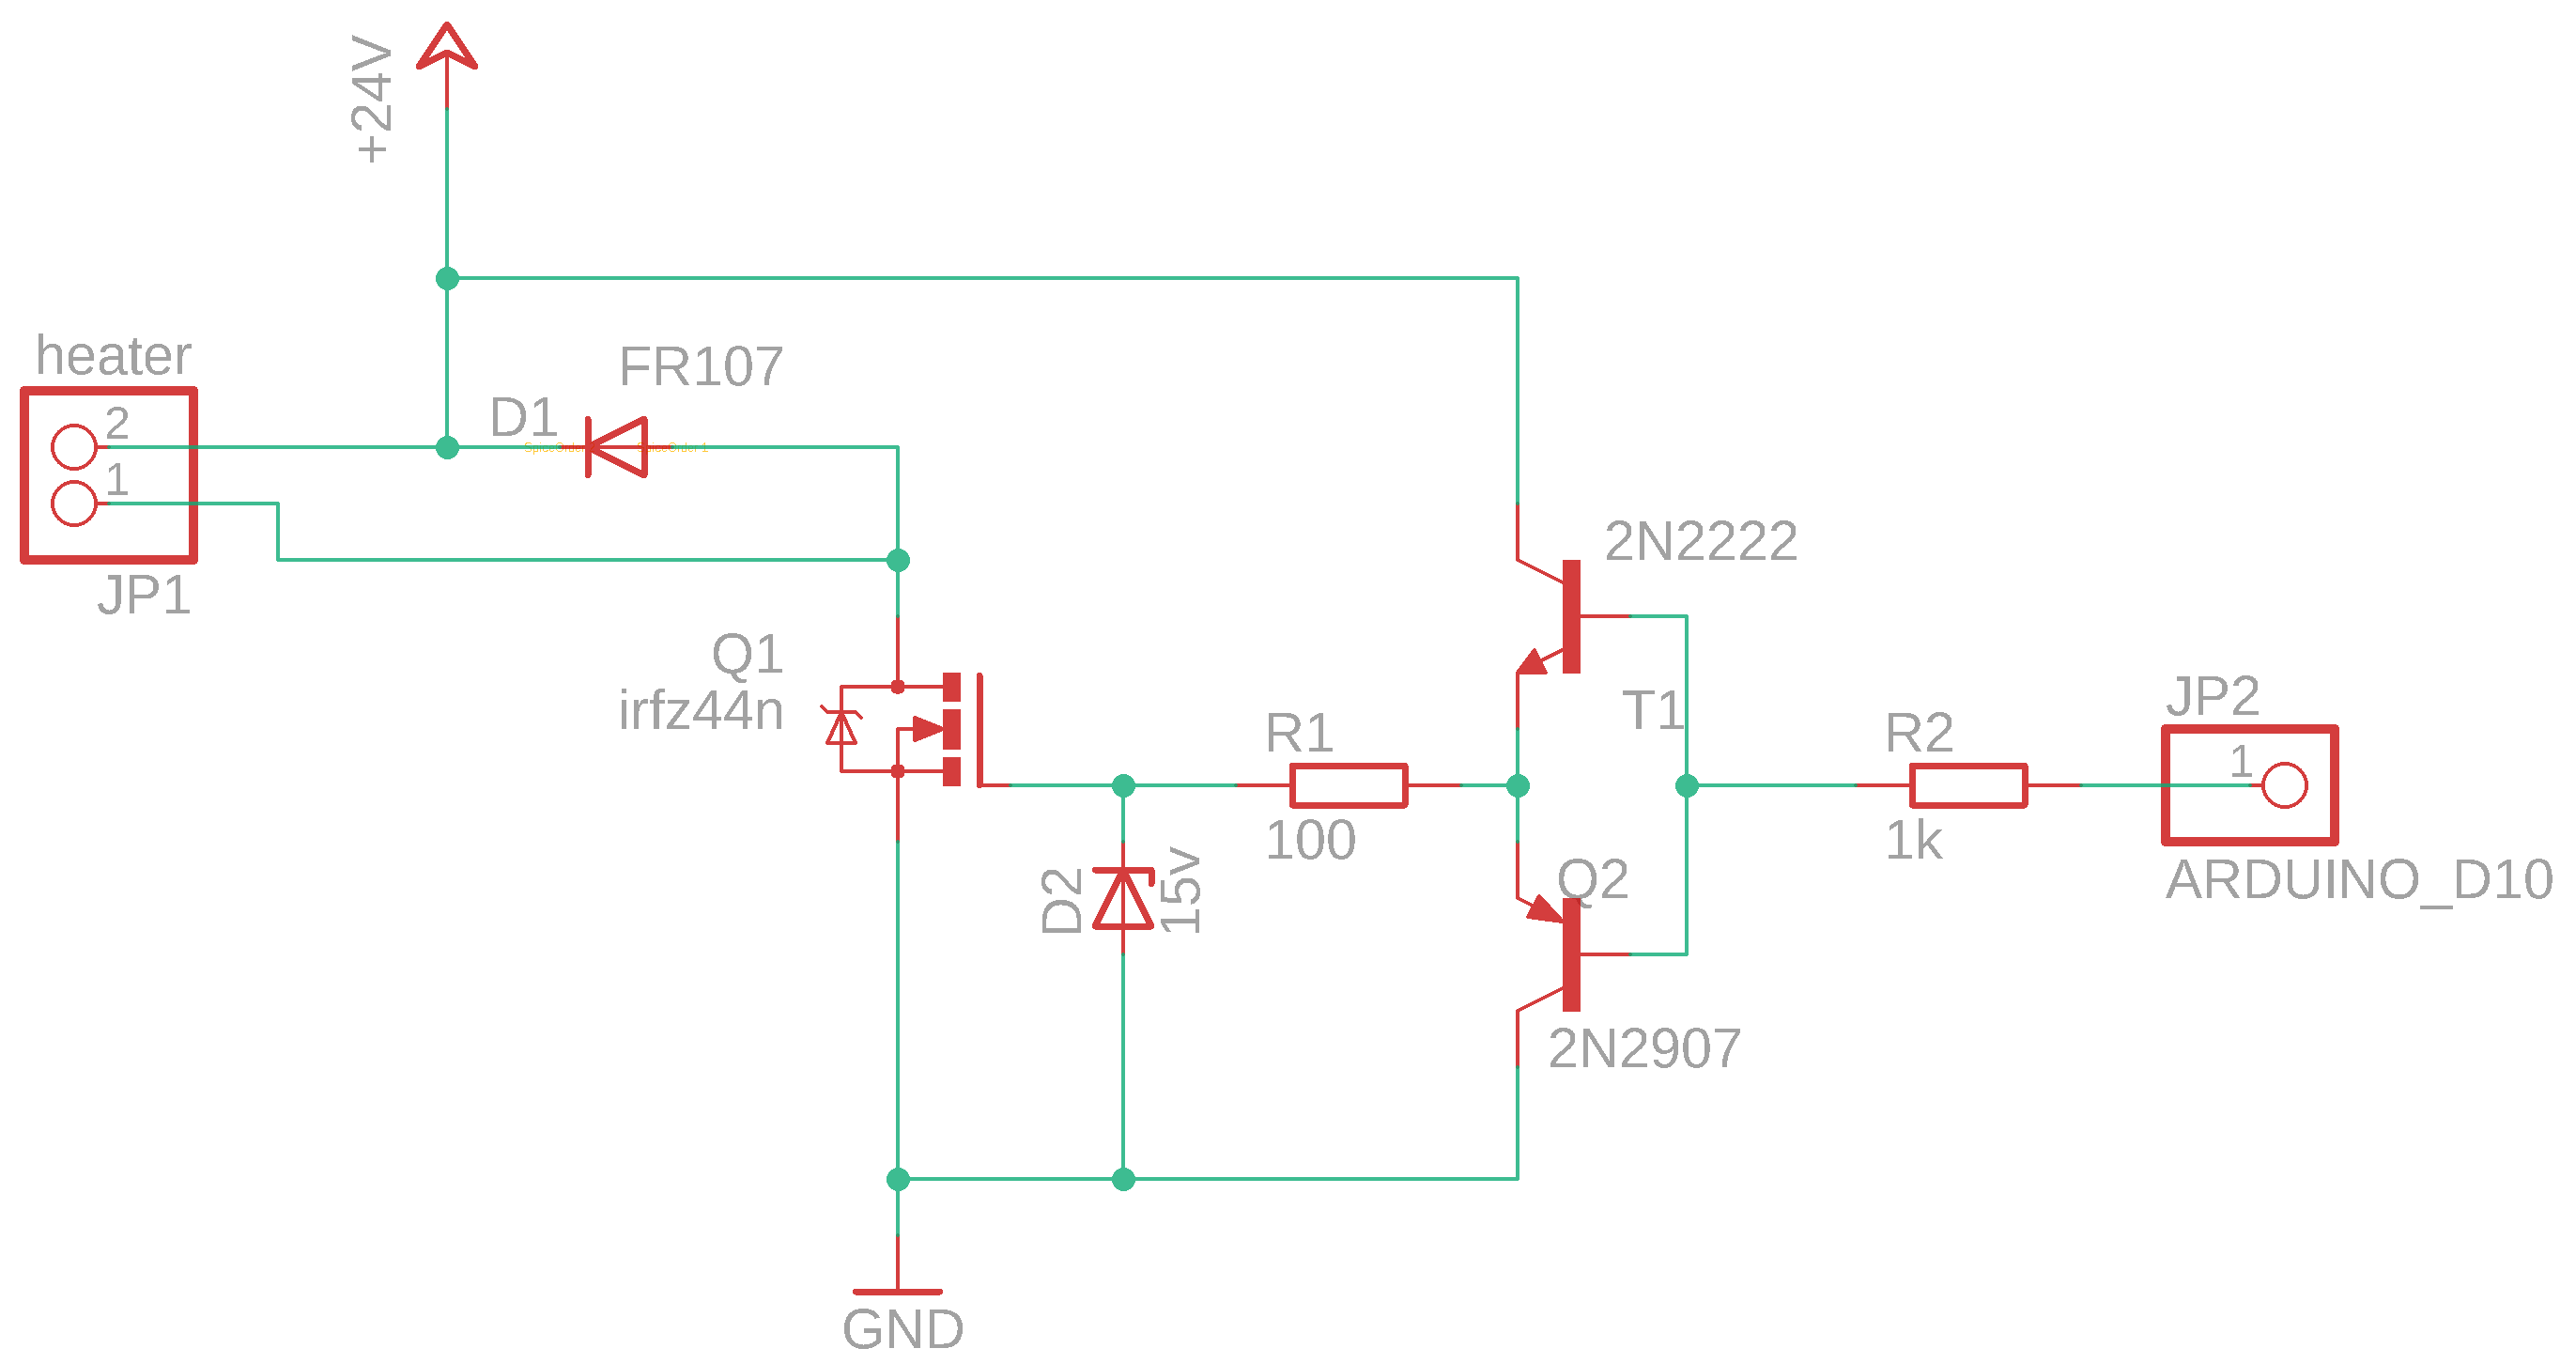 auto turn off soldering iron circuit